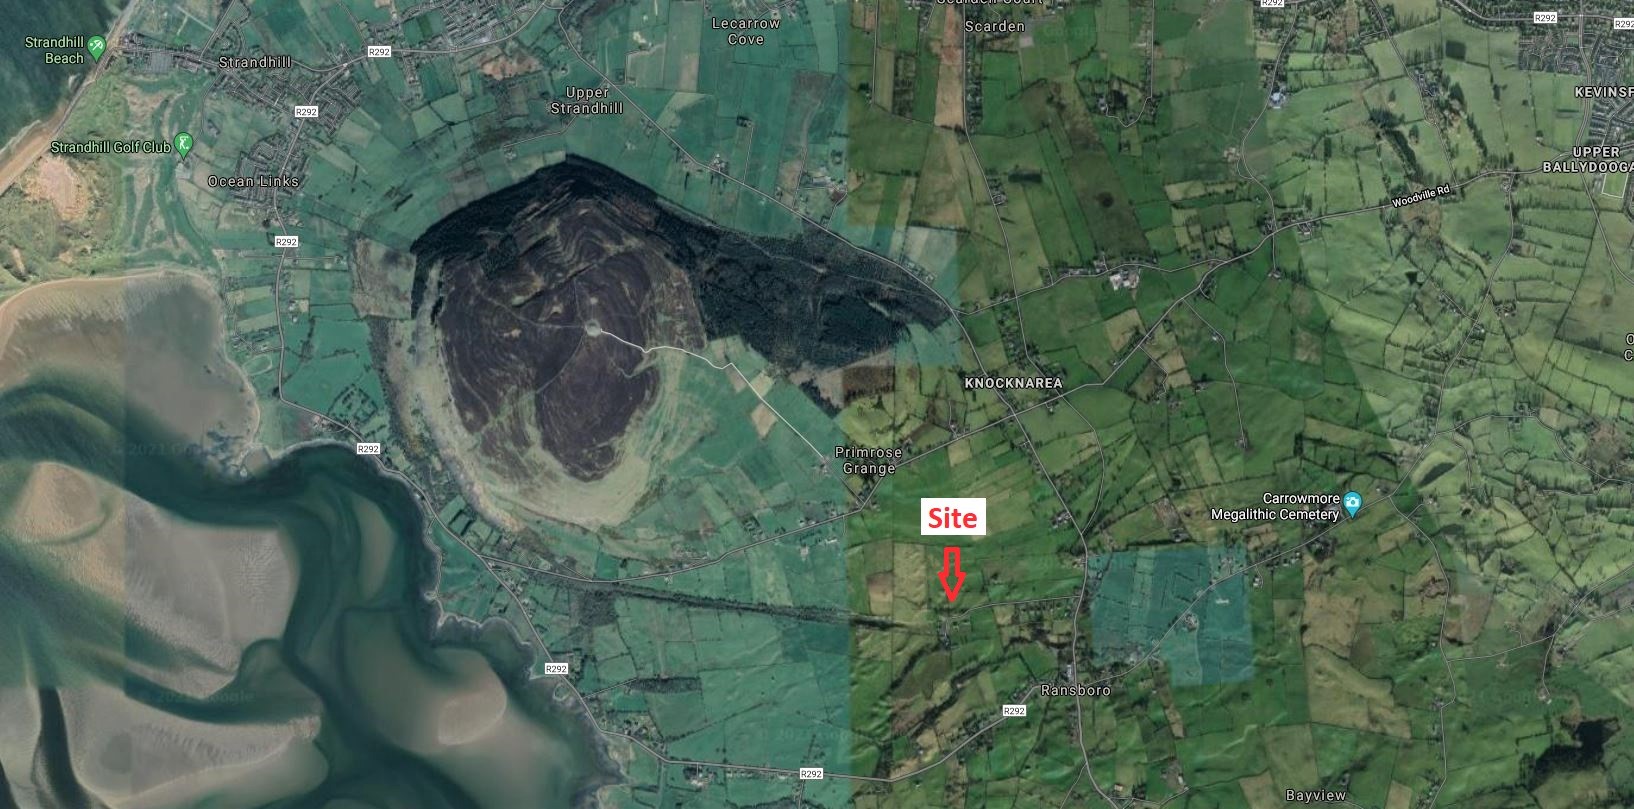 Site at Grange West, Knocknahur, Co. Sligo, Ireland